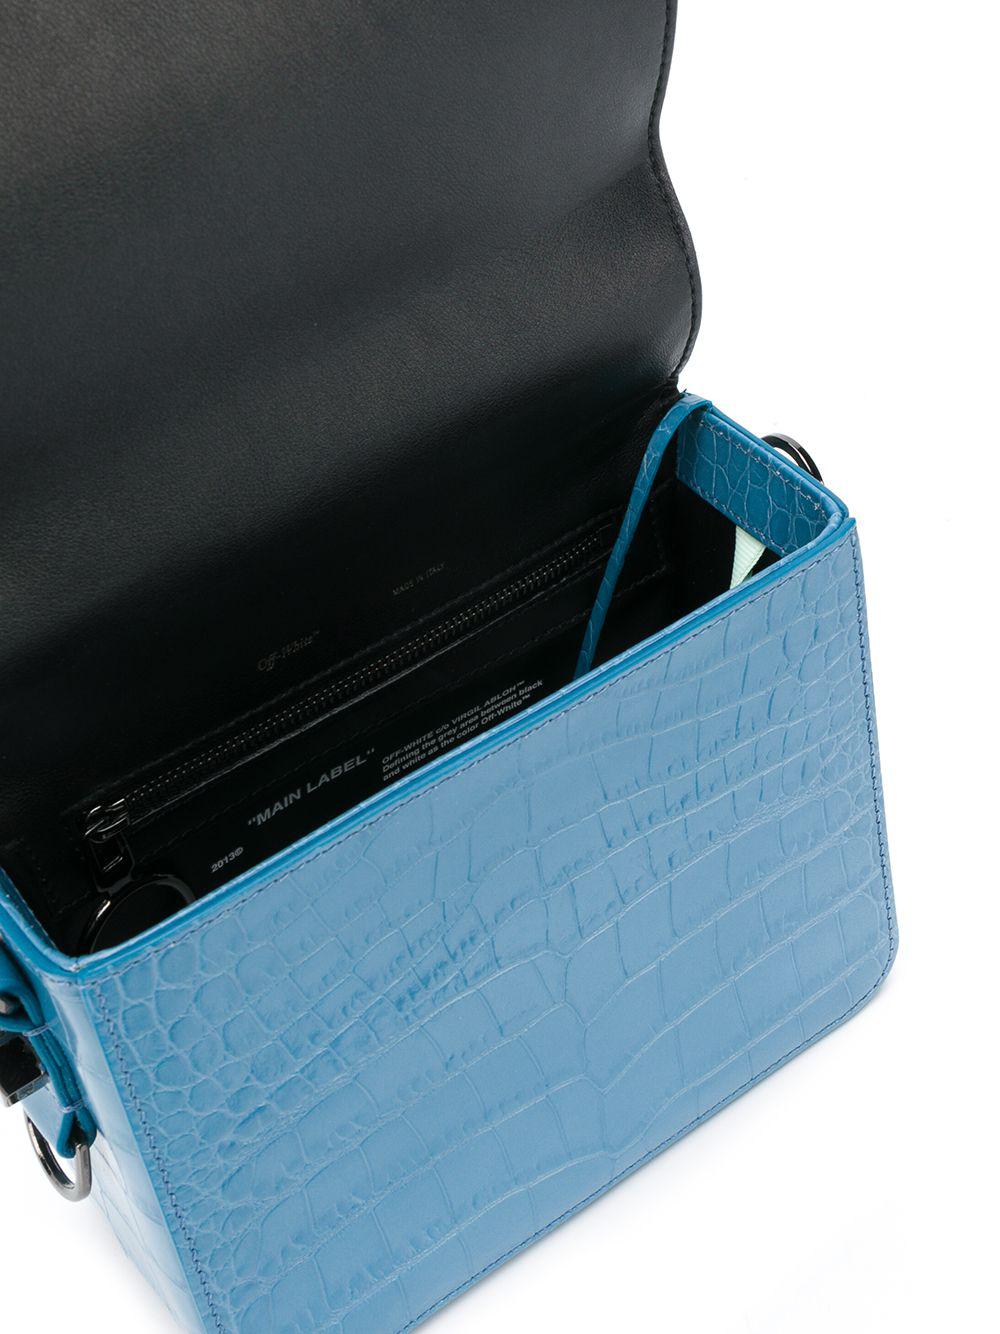 Off-White c/o Virgil Abloh Leather Embossed Crossbody Bag in Blue - Lyst